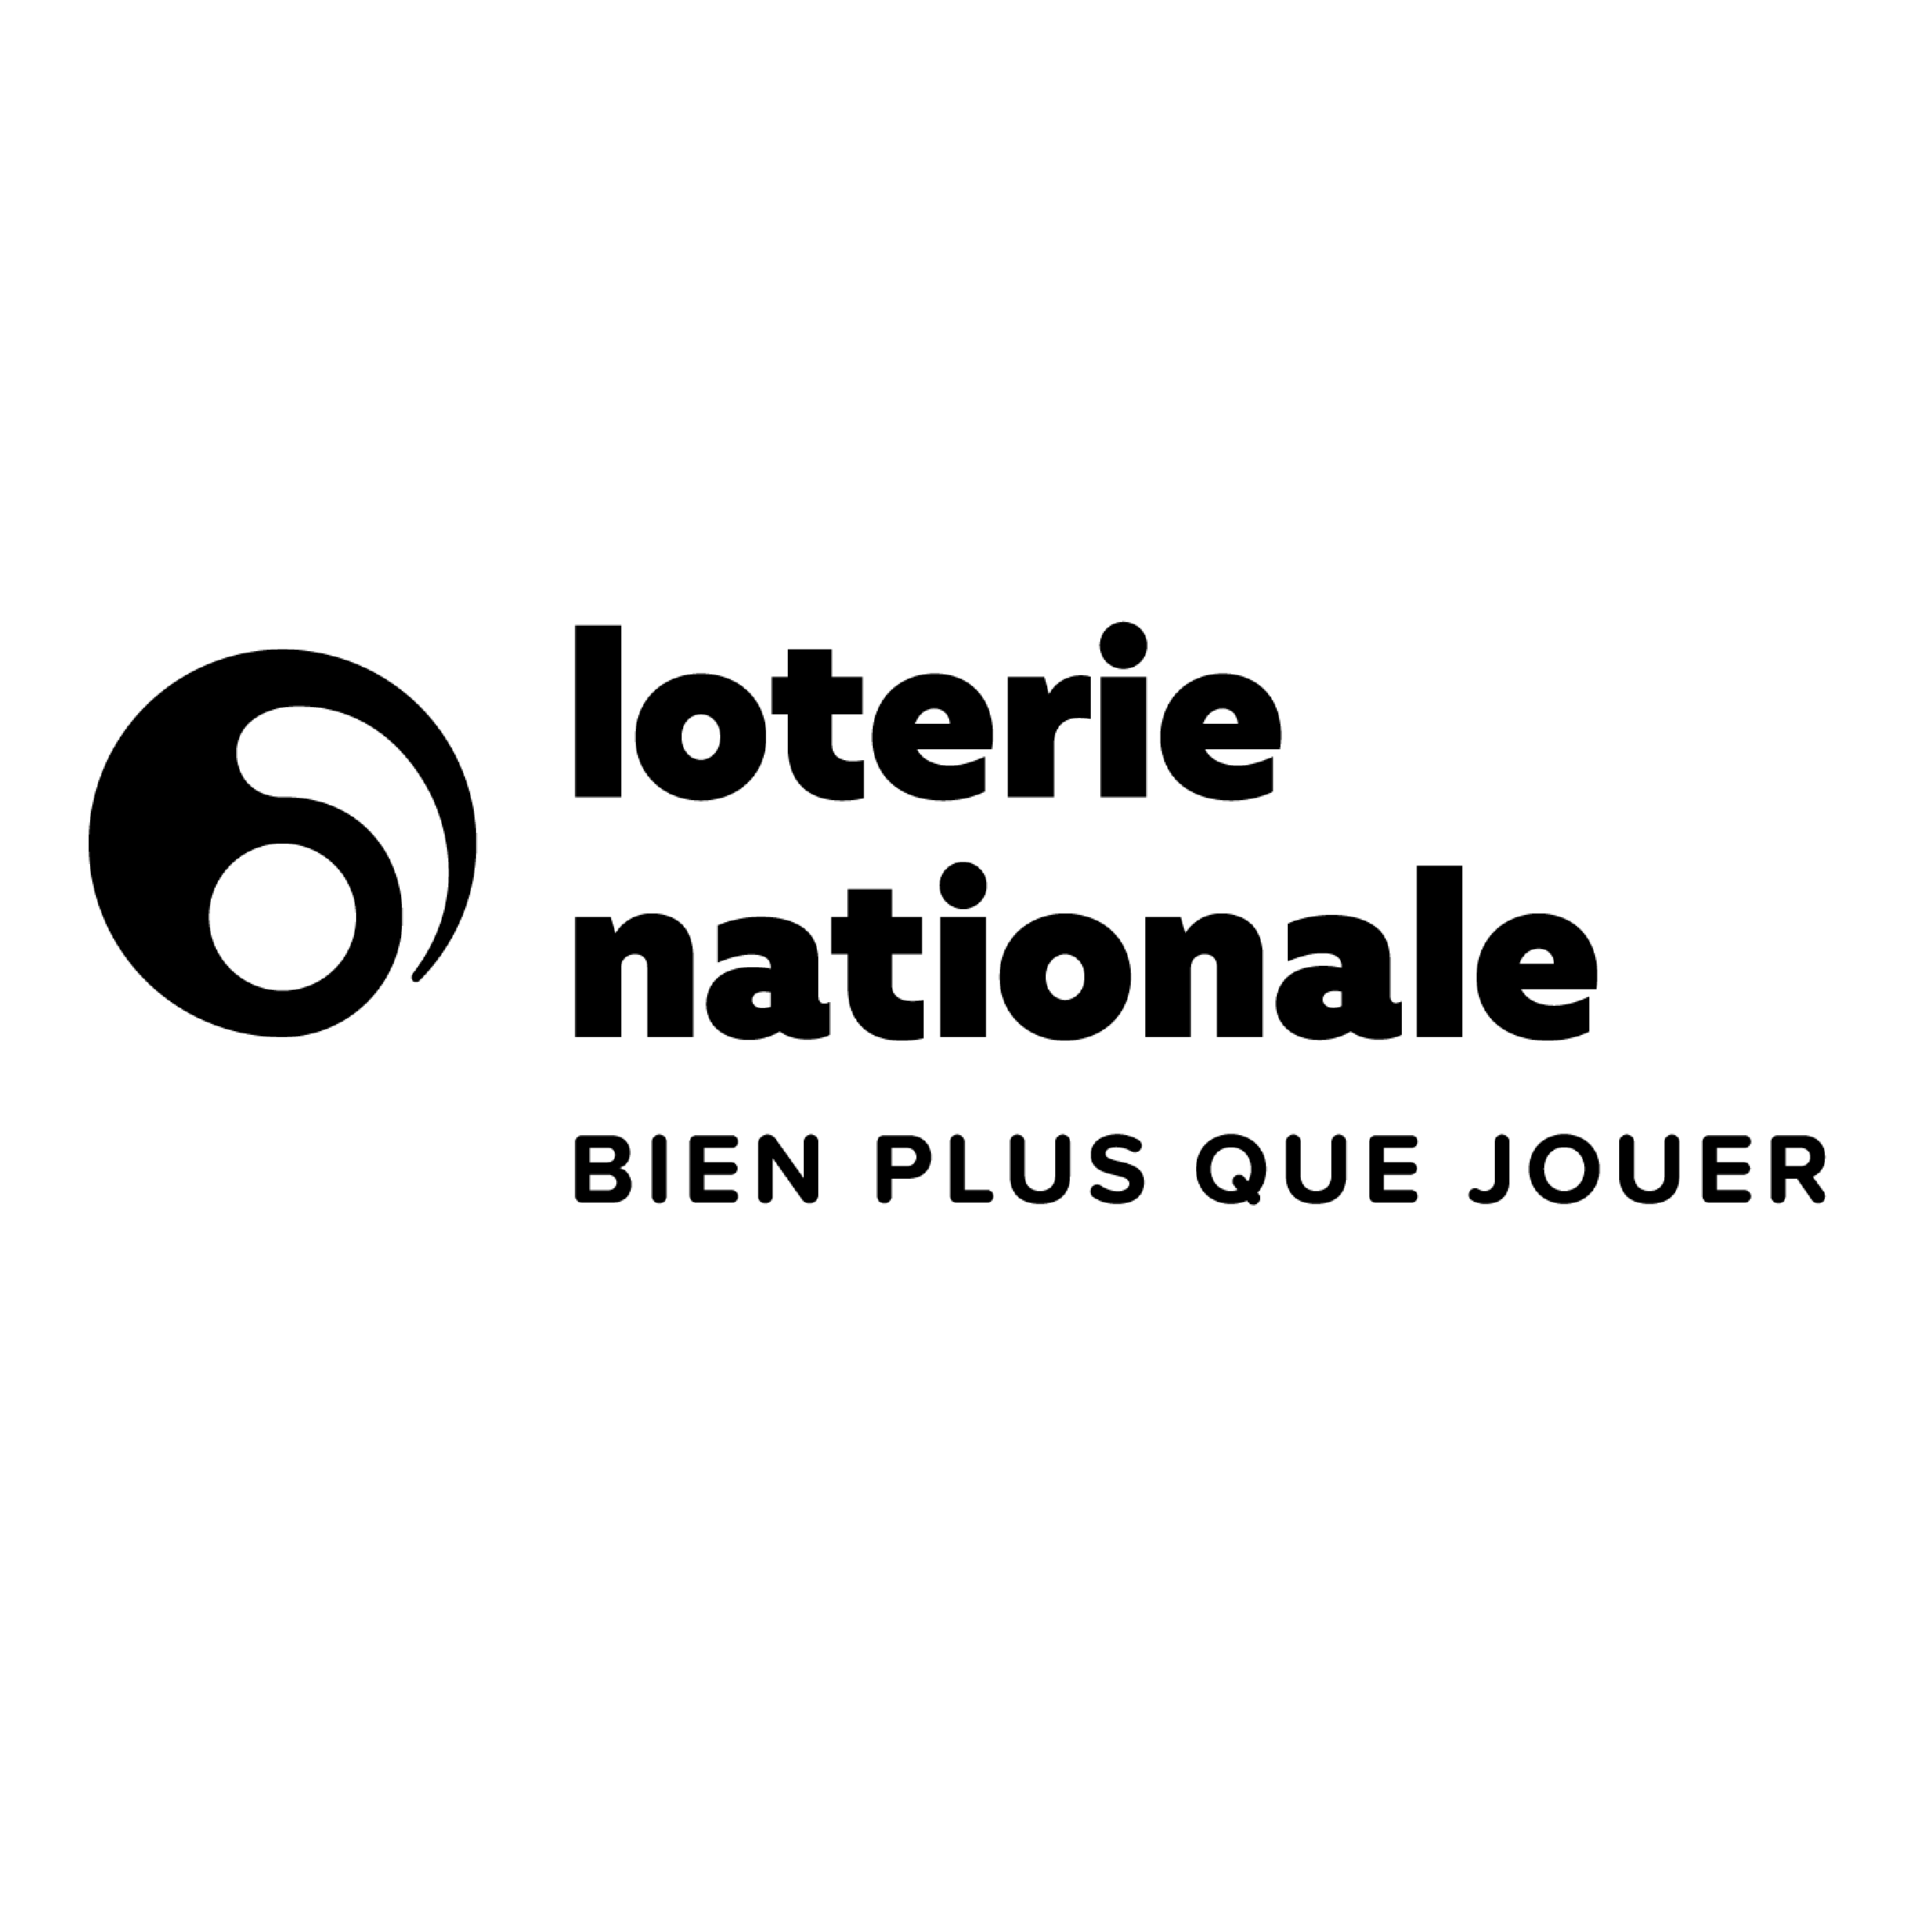 https://e8f2biq7wud.exactdn.com/wp-content/uploads/2022/10/Logo-Loterie-Nationale-web-01.png?strip=all&lossy=1&w=1920&ssl=1